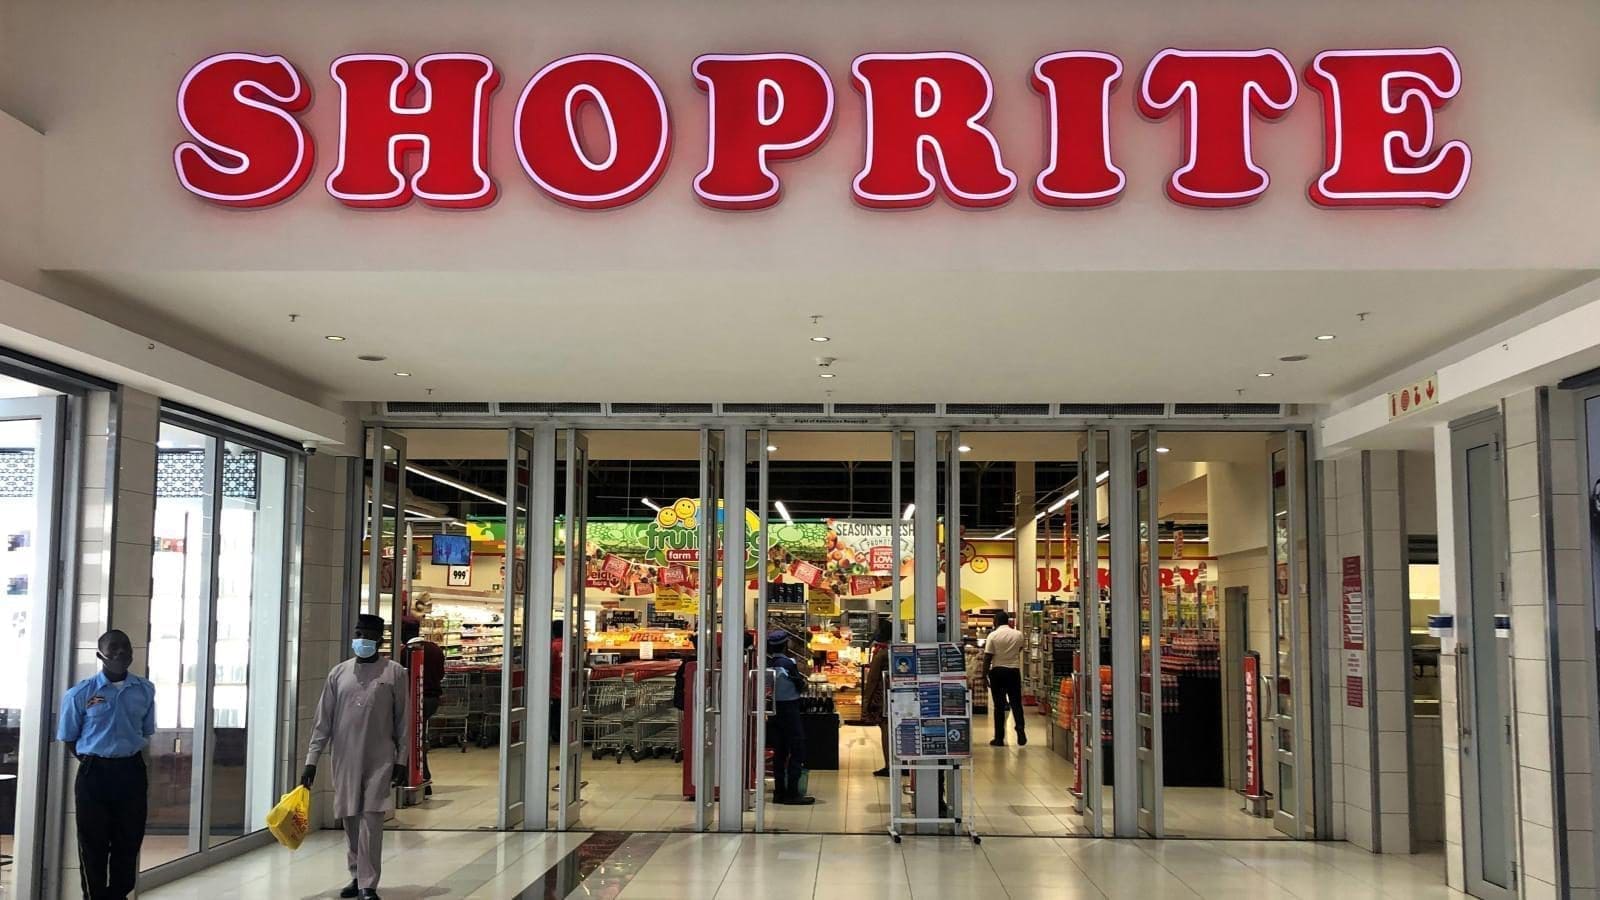 Shoprite, Naivas supermarkets continue cementing leadership position in home markets